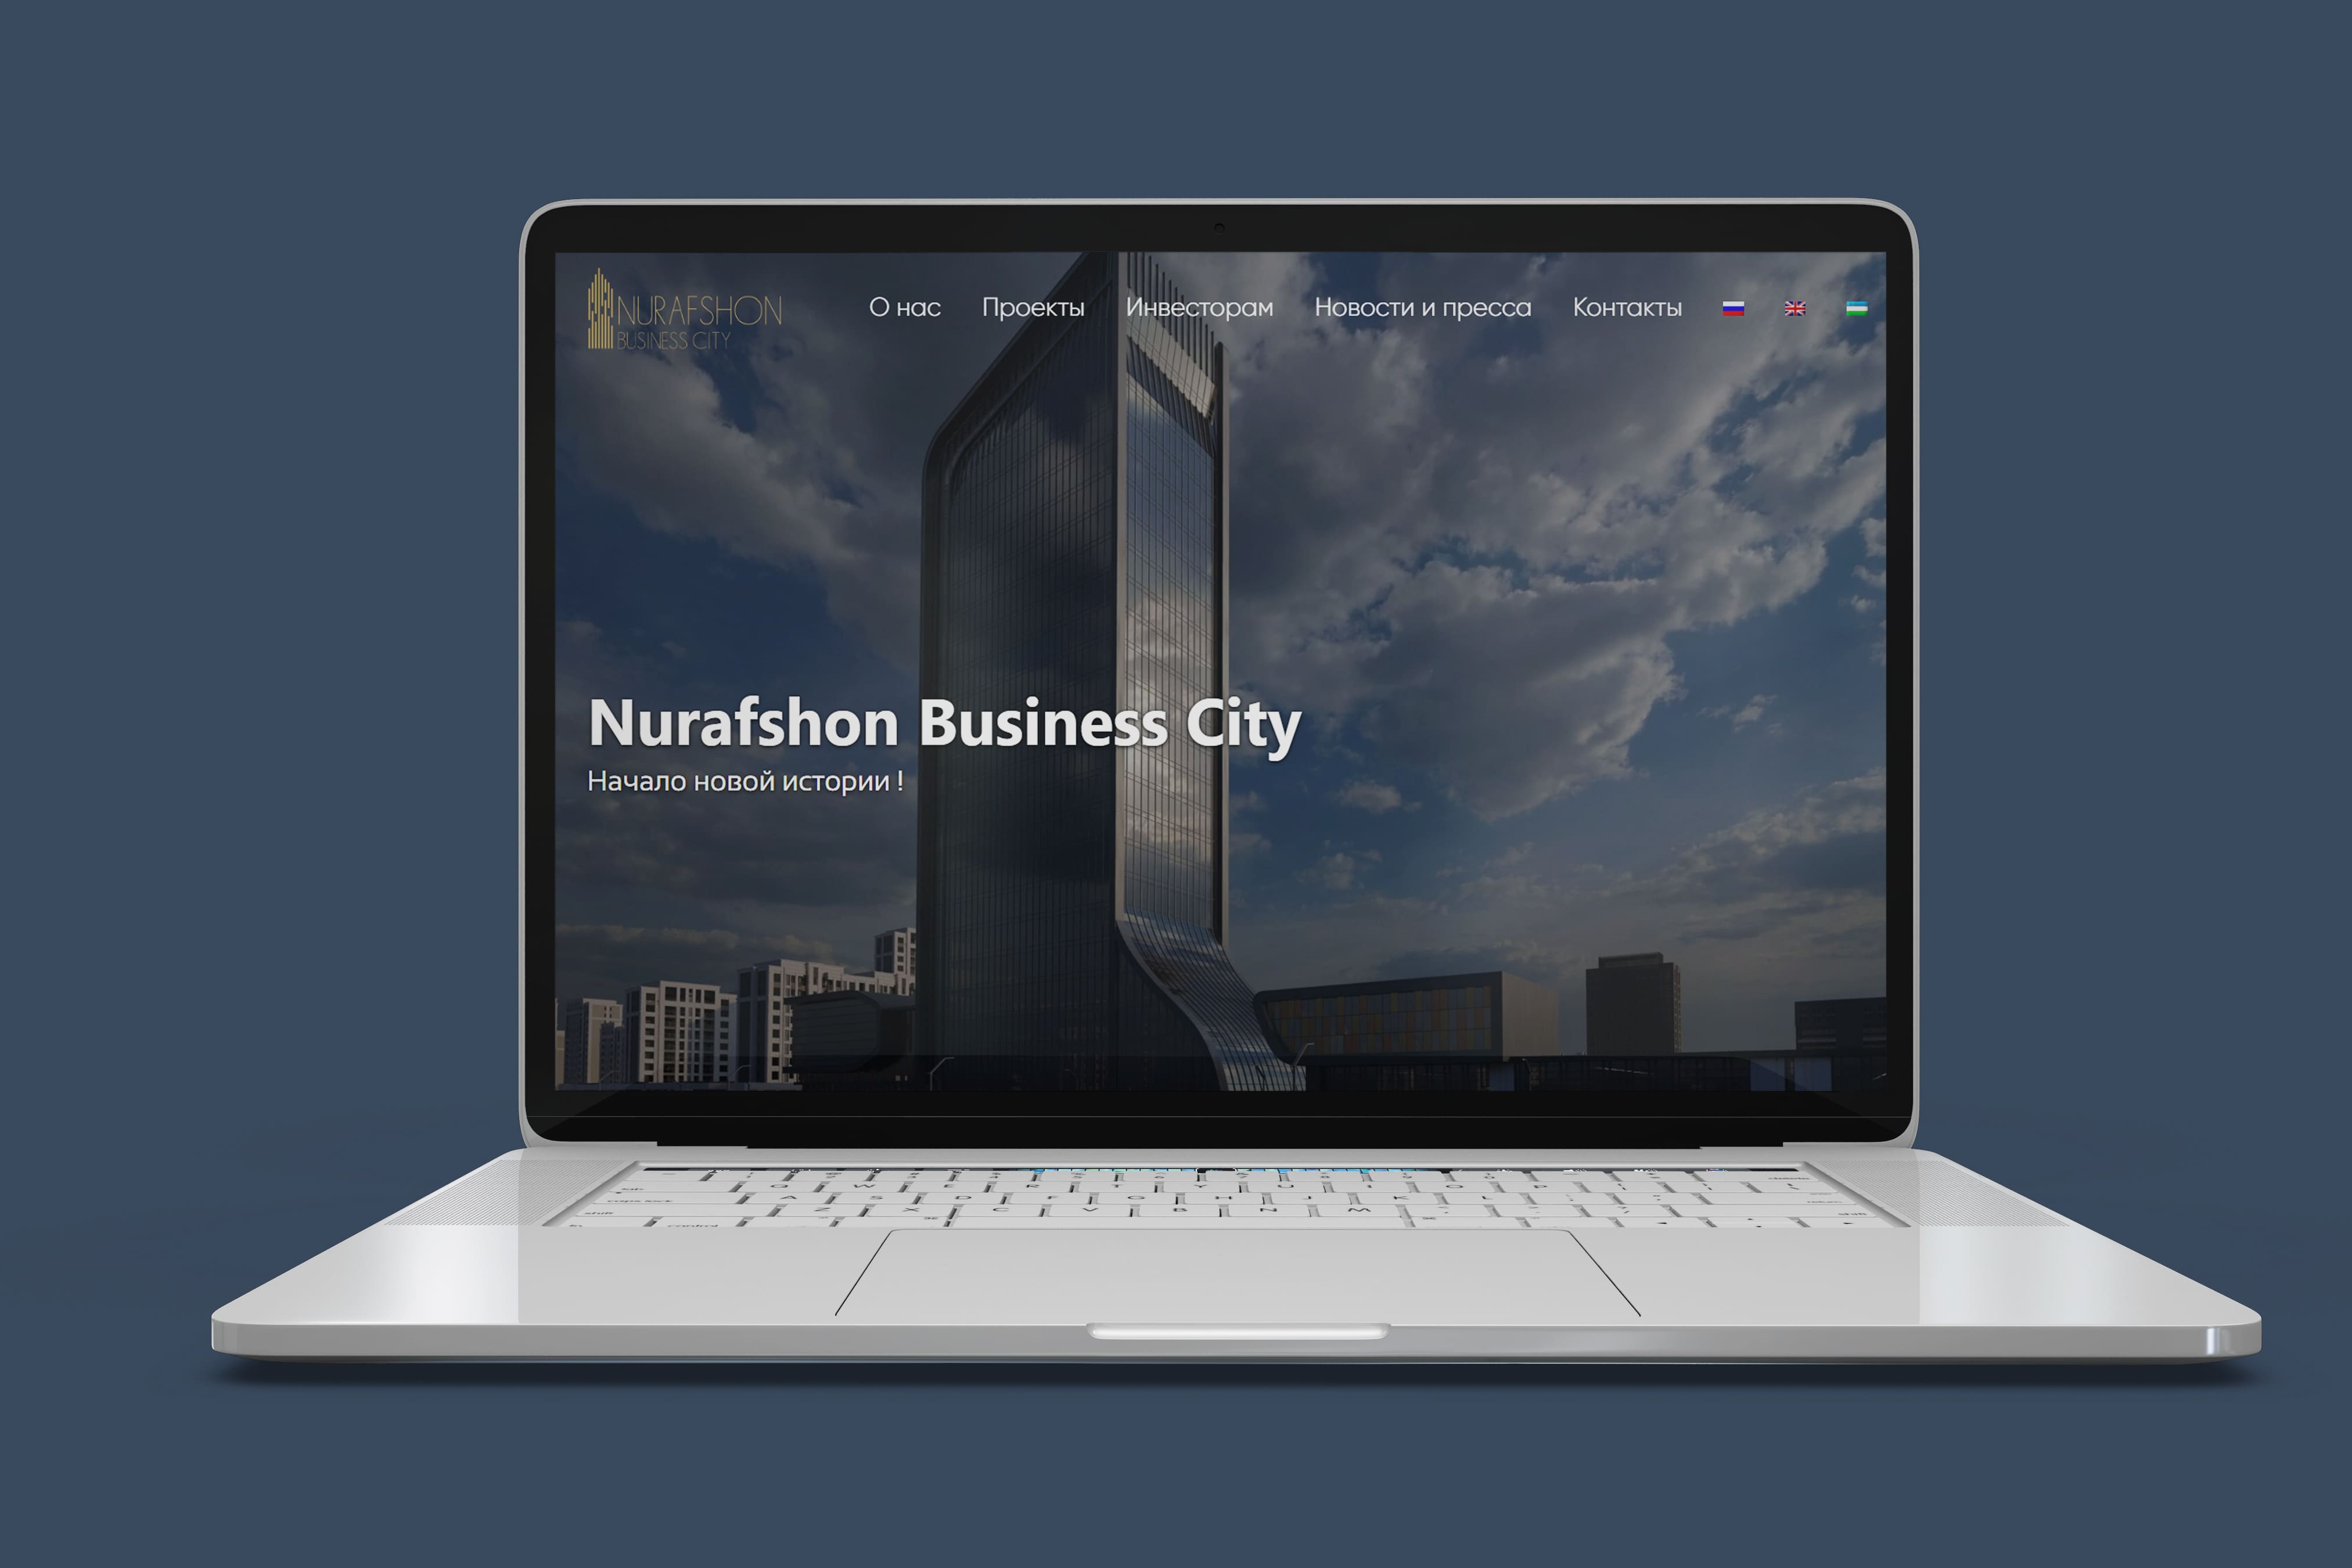 Nurafshon Business City